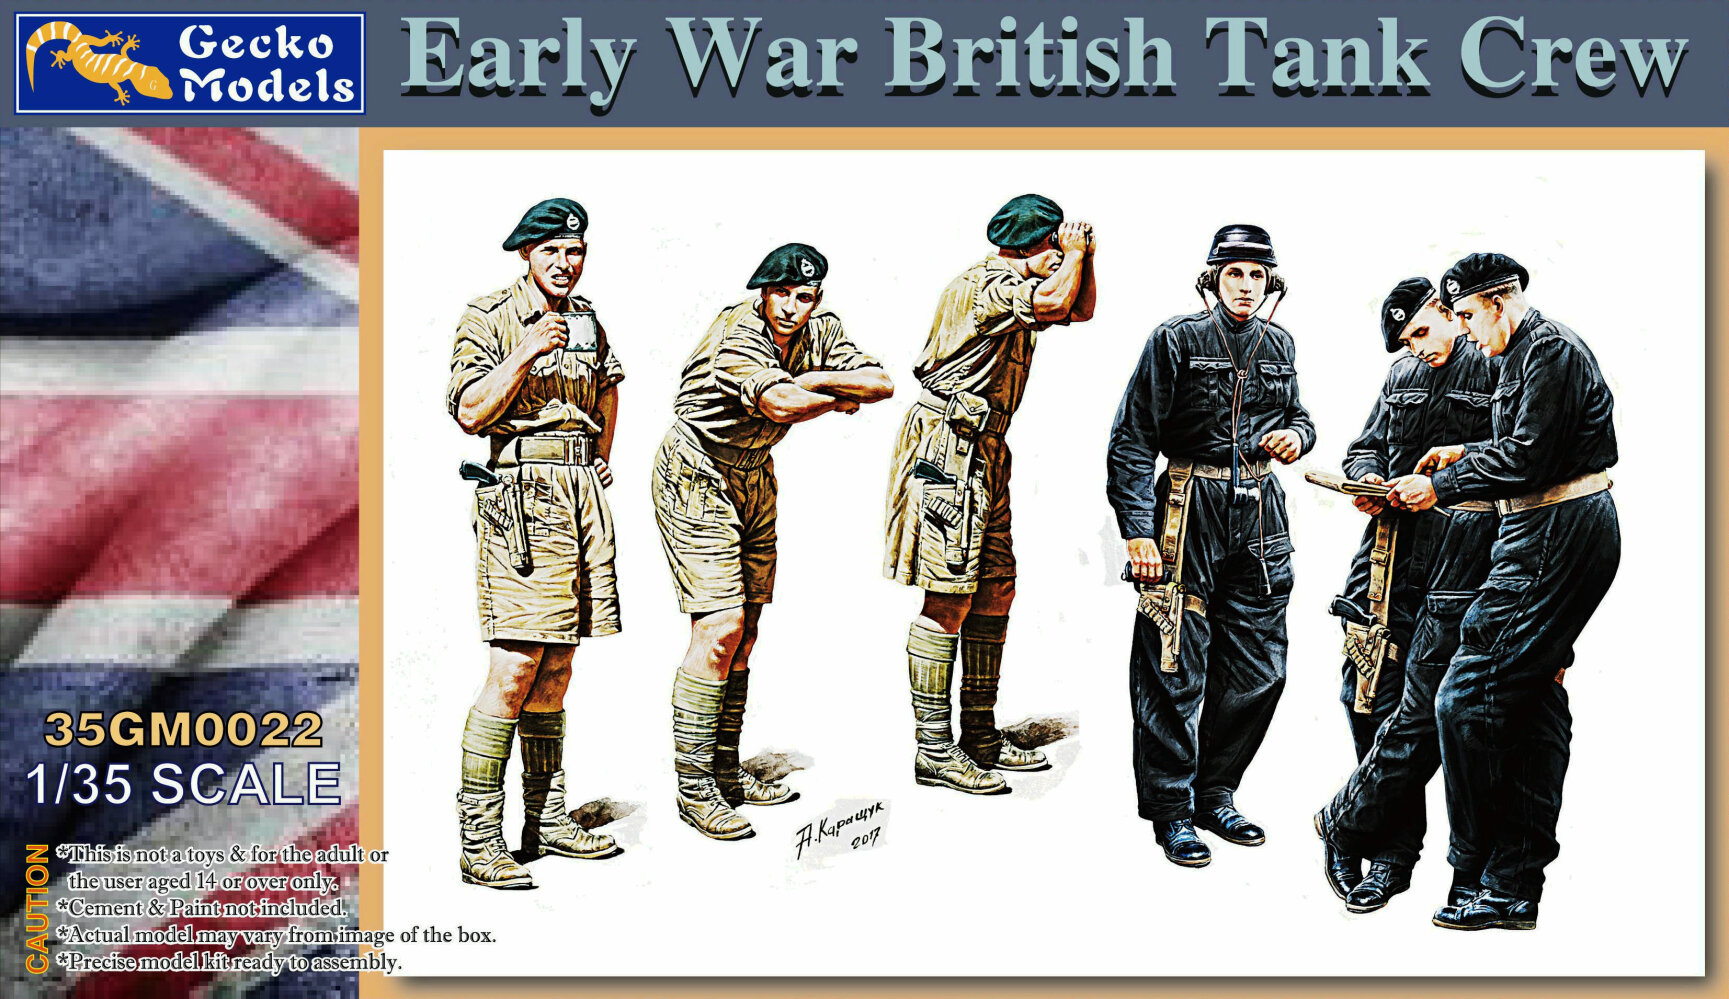 Eary War British Tank Crew